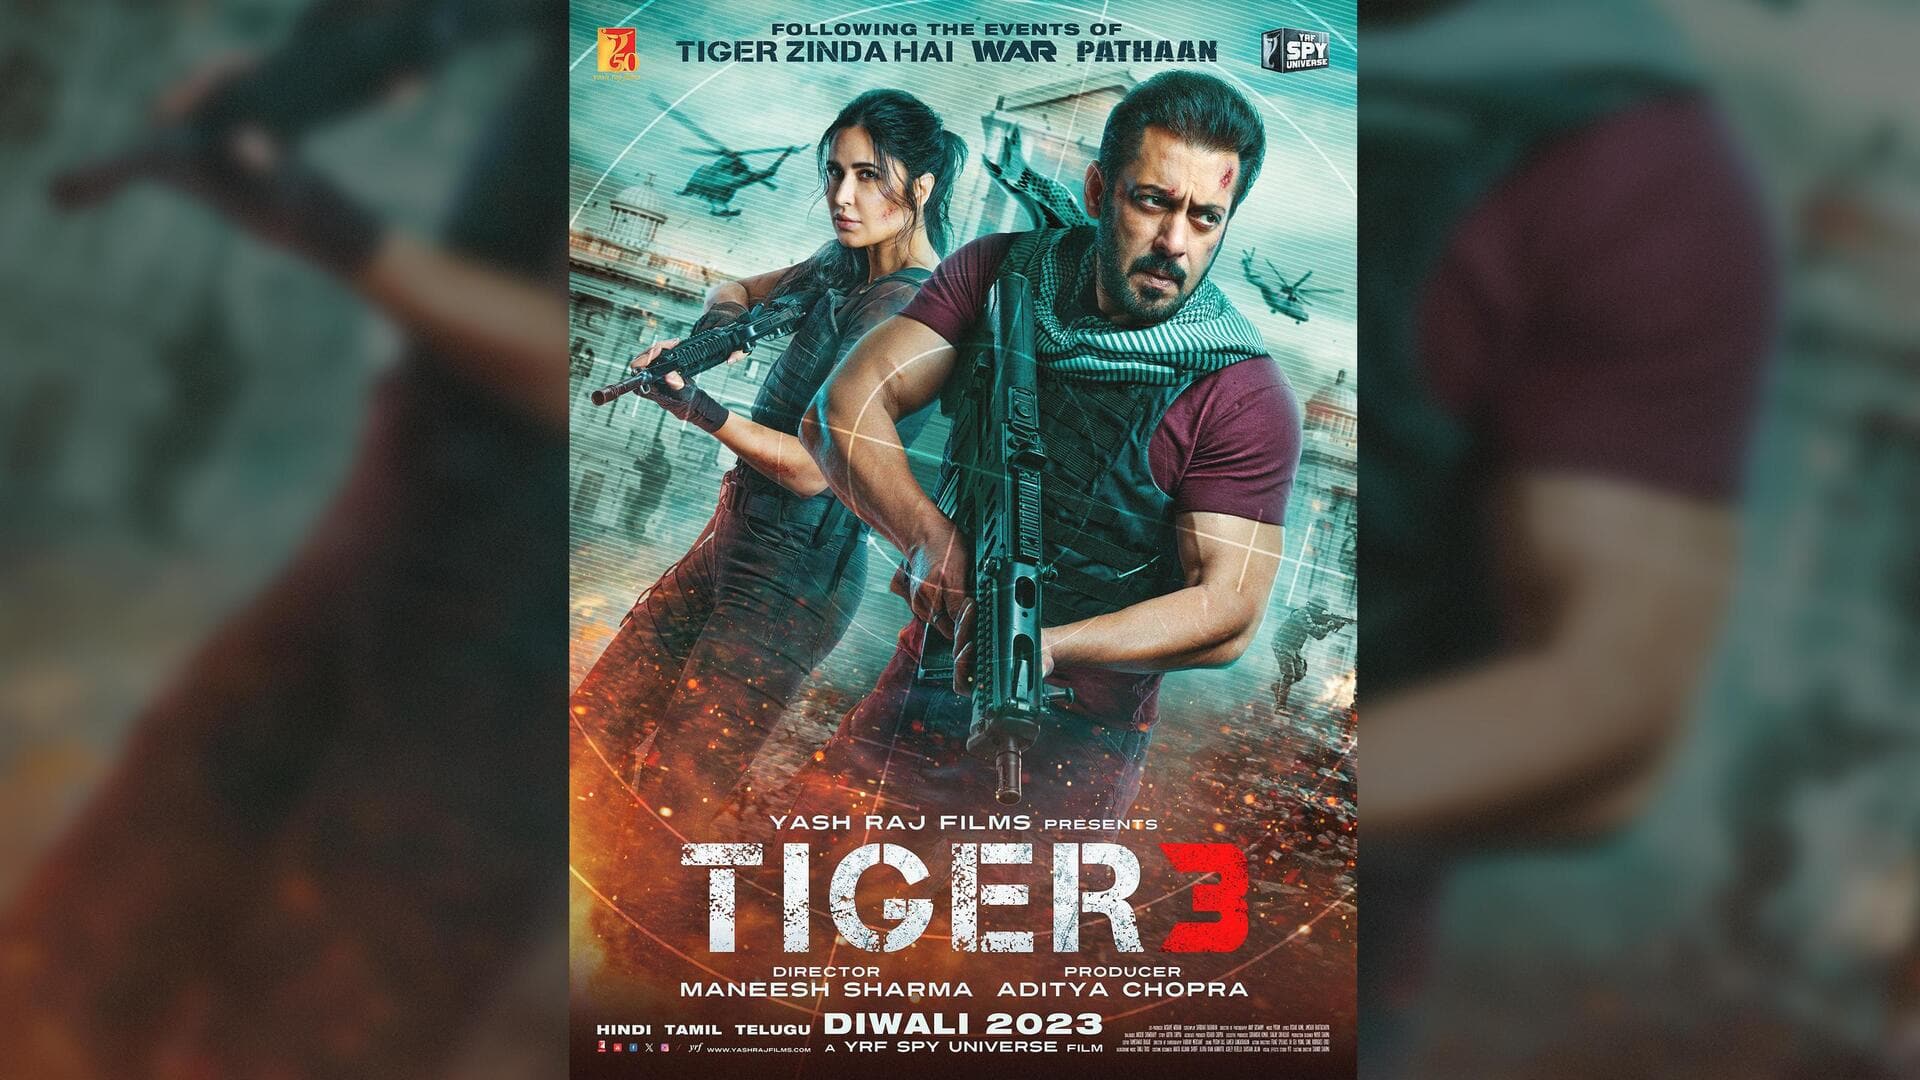 Prabhudheva to helm Salman Khan's next 'Tiger' film?